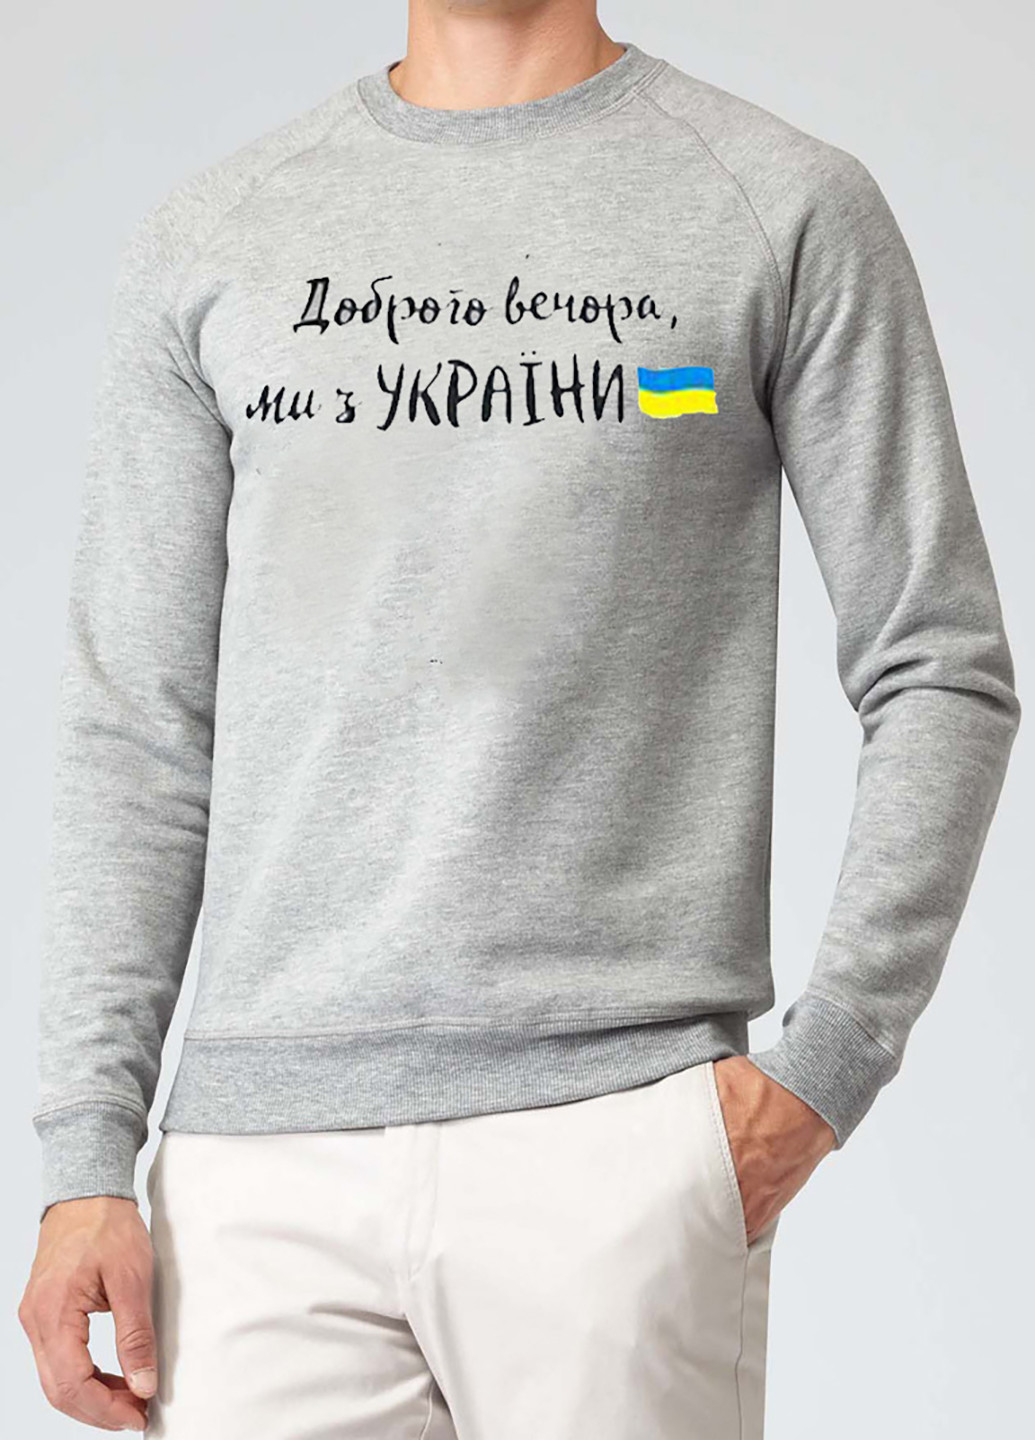 Свитшот мужской серый Доброго вечора, ми з України!-2 Love&Live - крой серый кэжуал - (258022373)